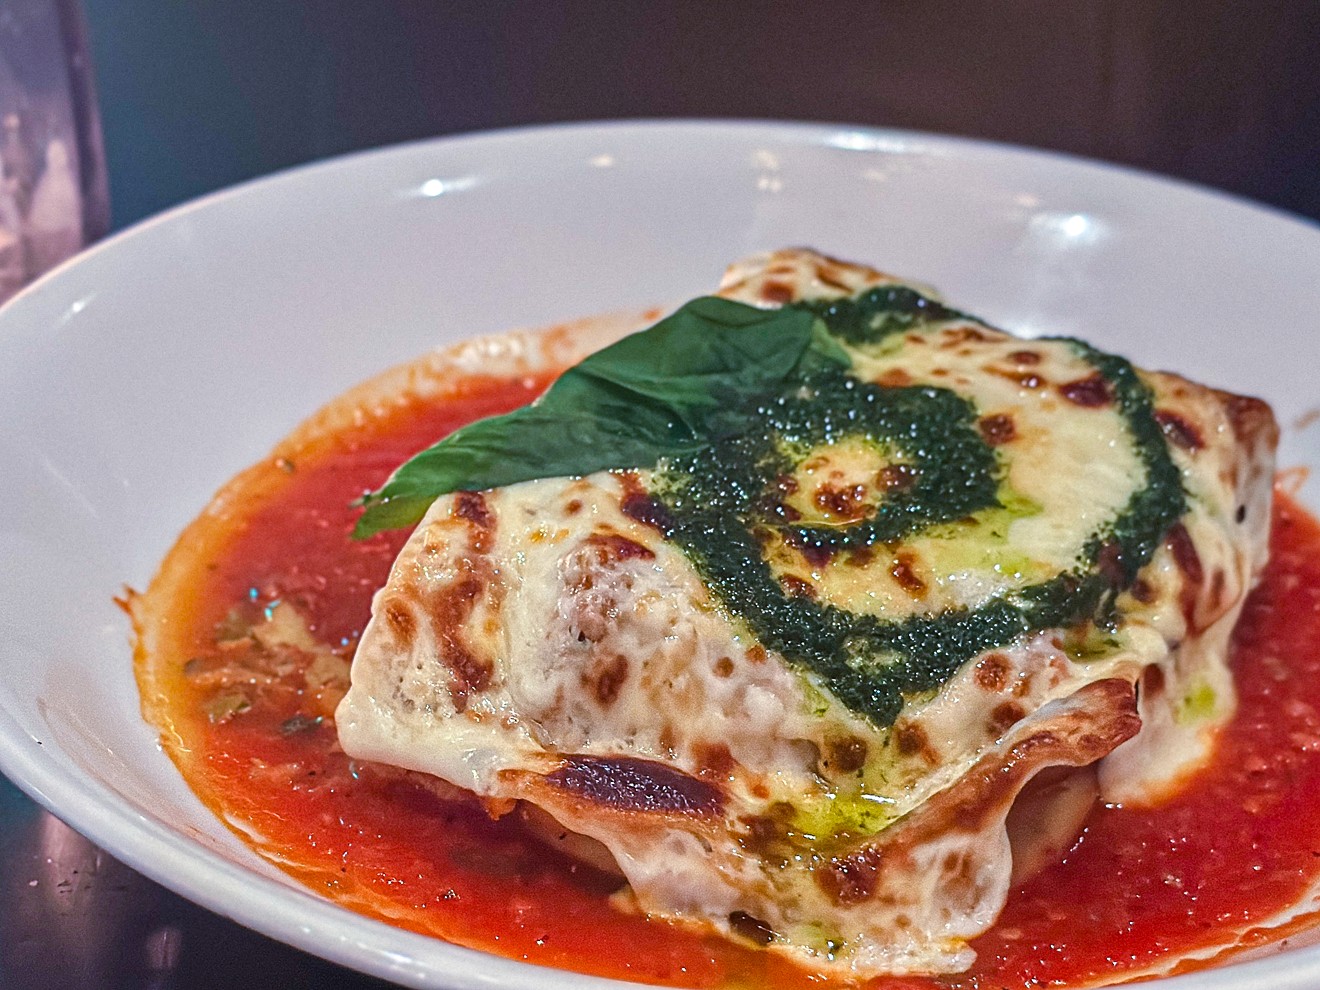 Green chili lasagna, Renny's Southwest take on the Italian classic.